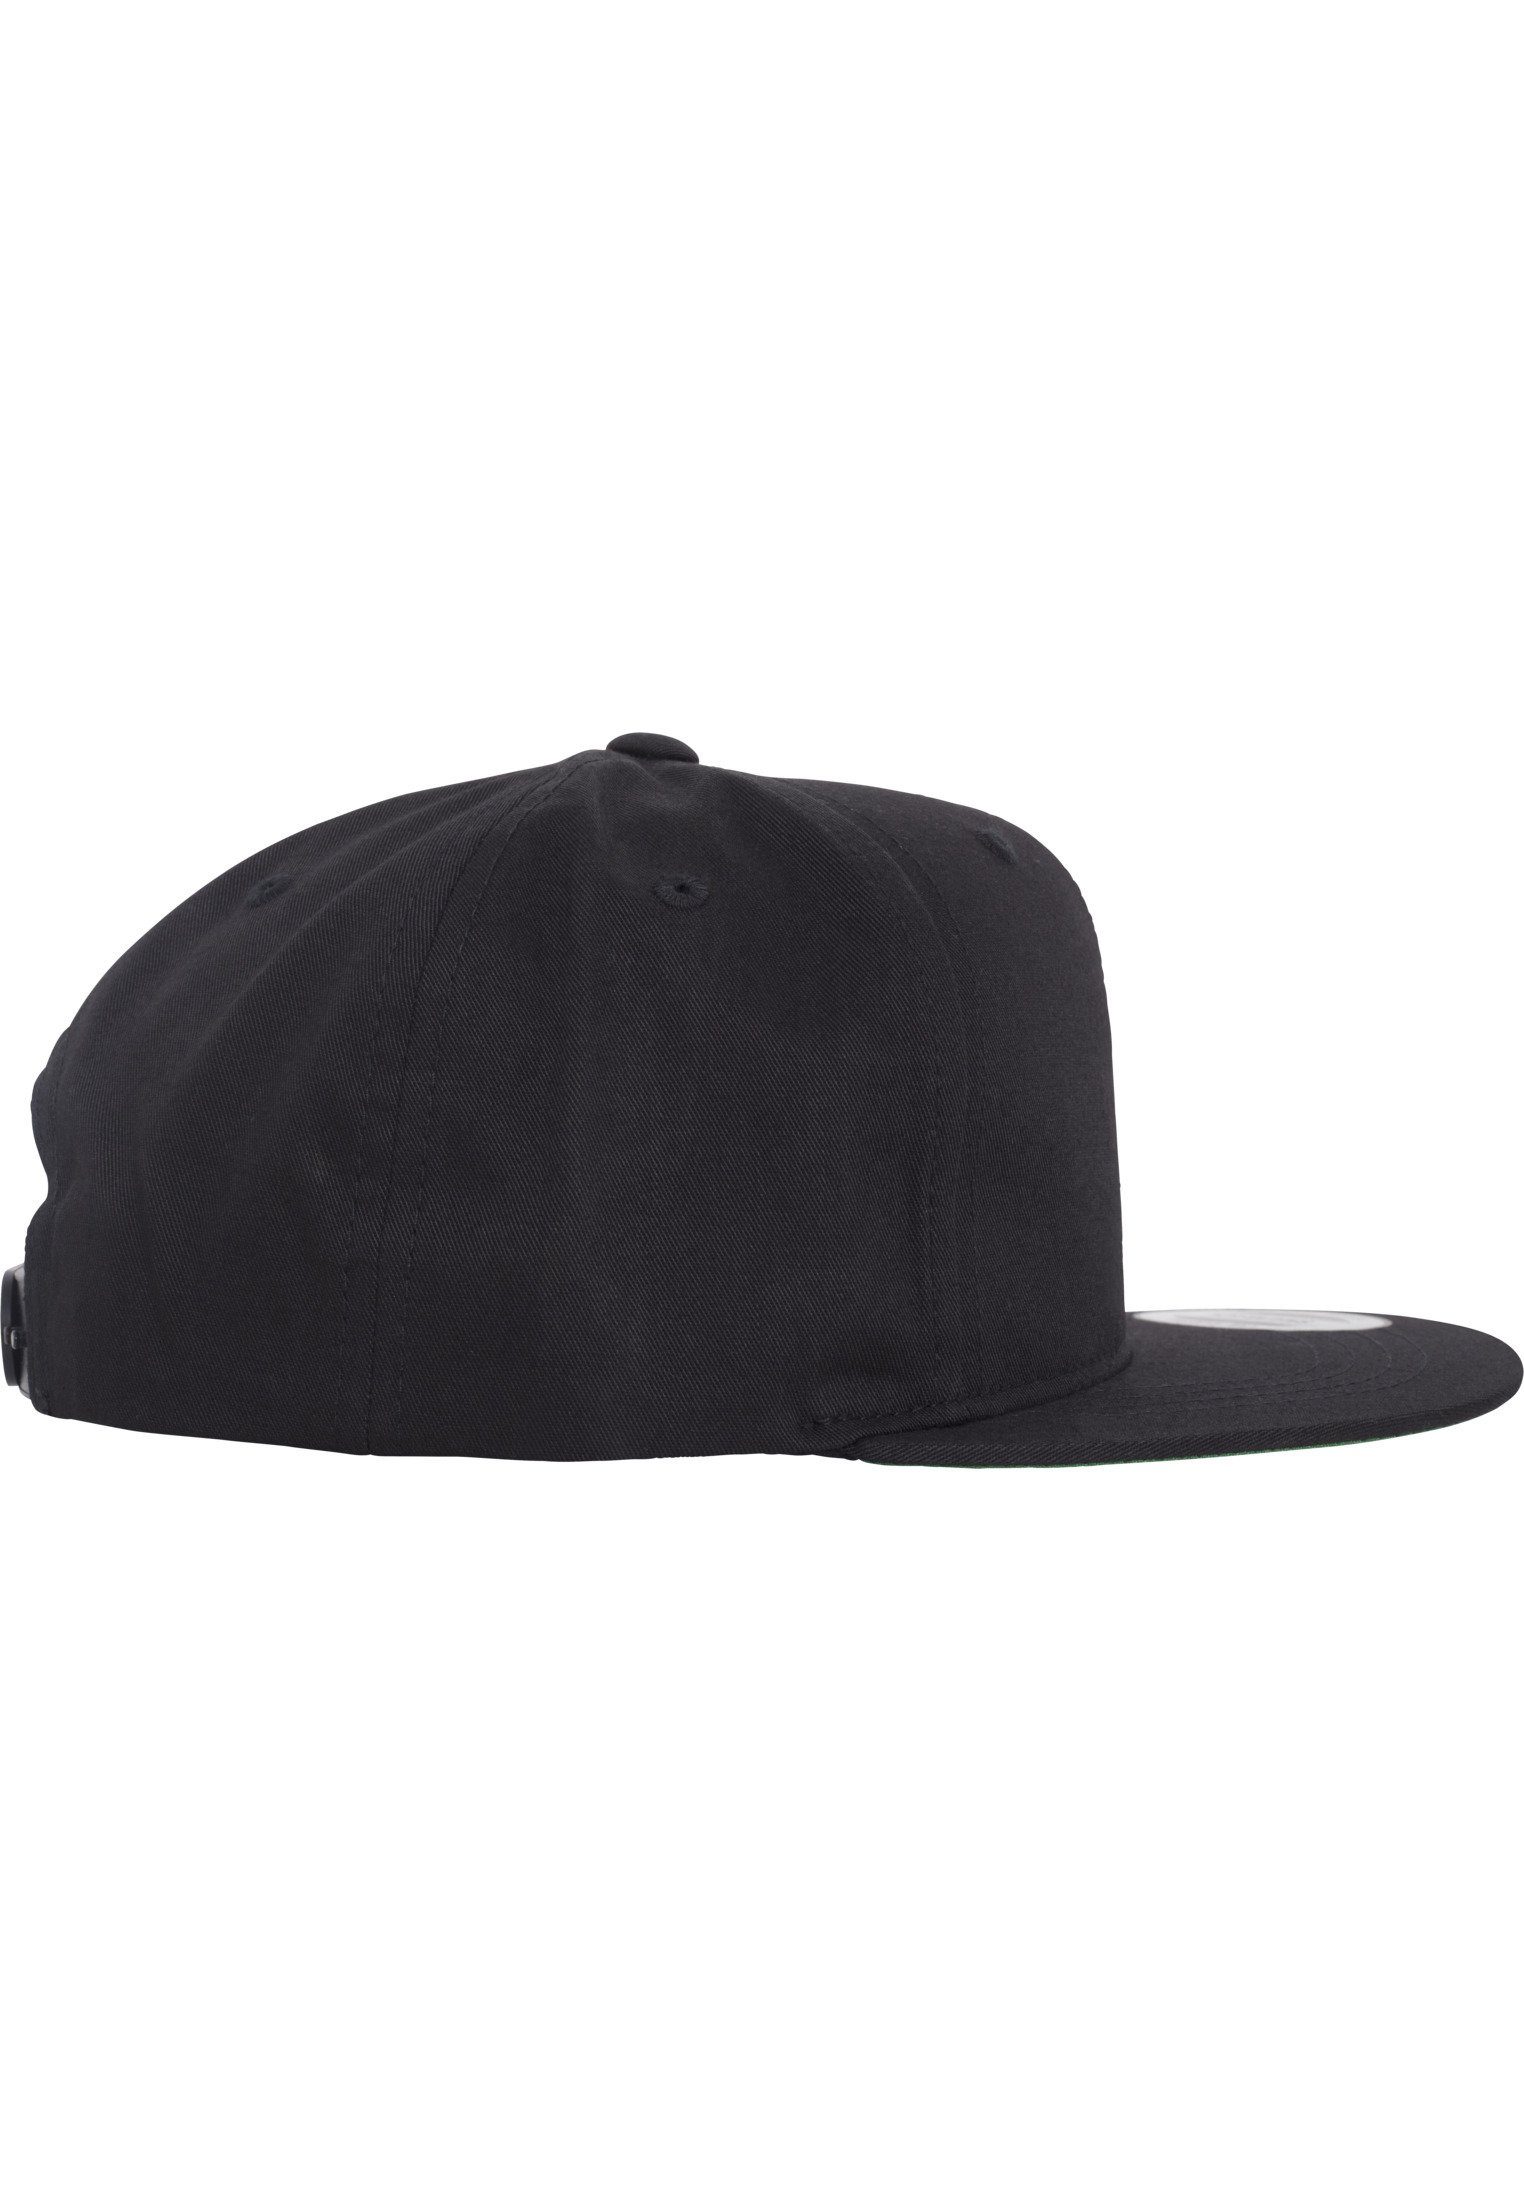 Flexfit Flex Snapback Snapback Youth black Cap Twill Pro-Style Cap